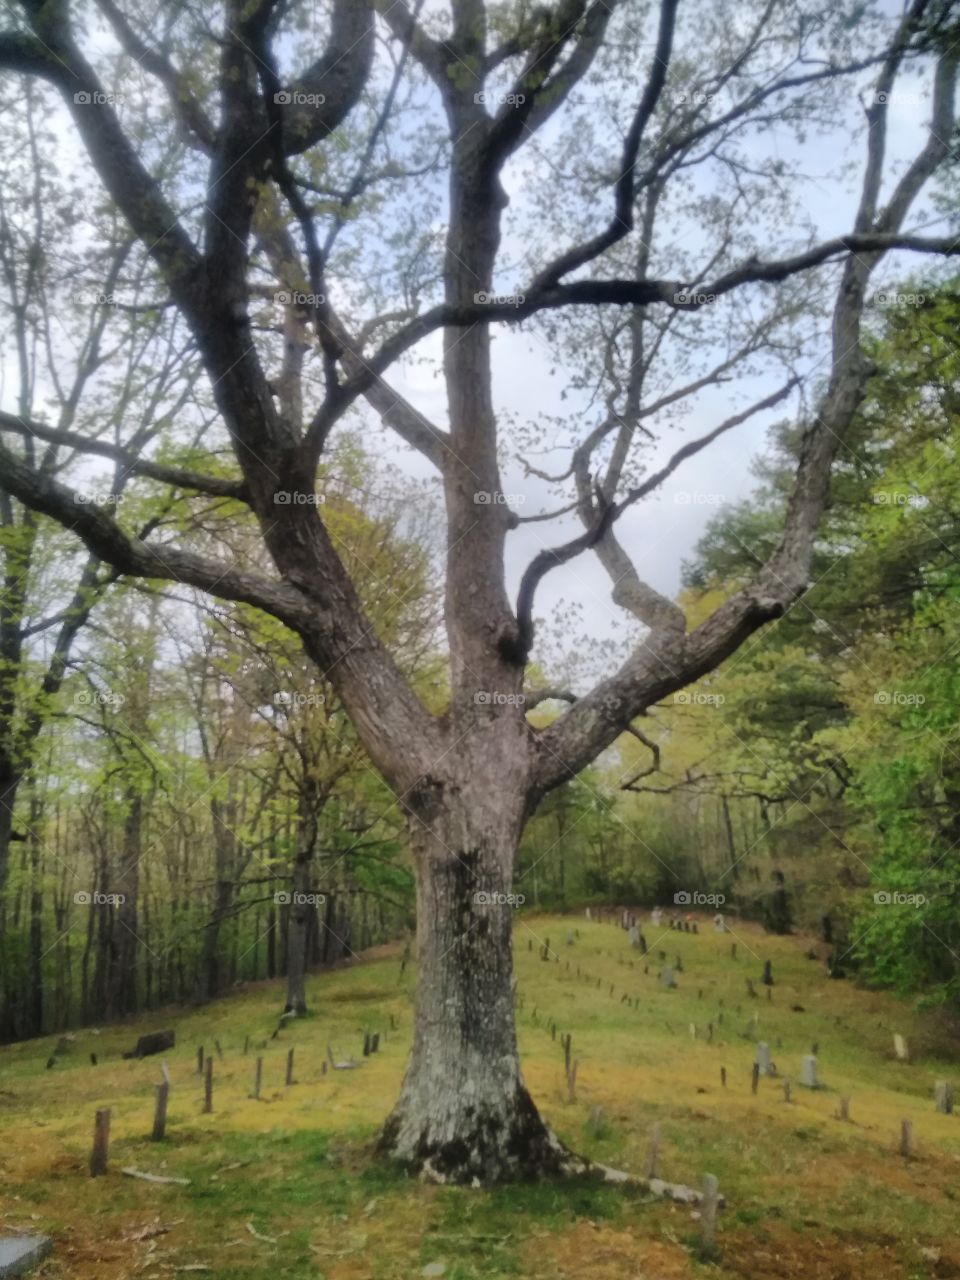 graveyard tree